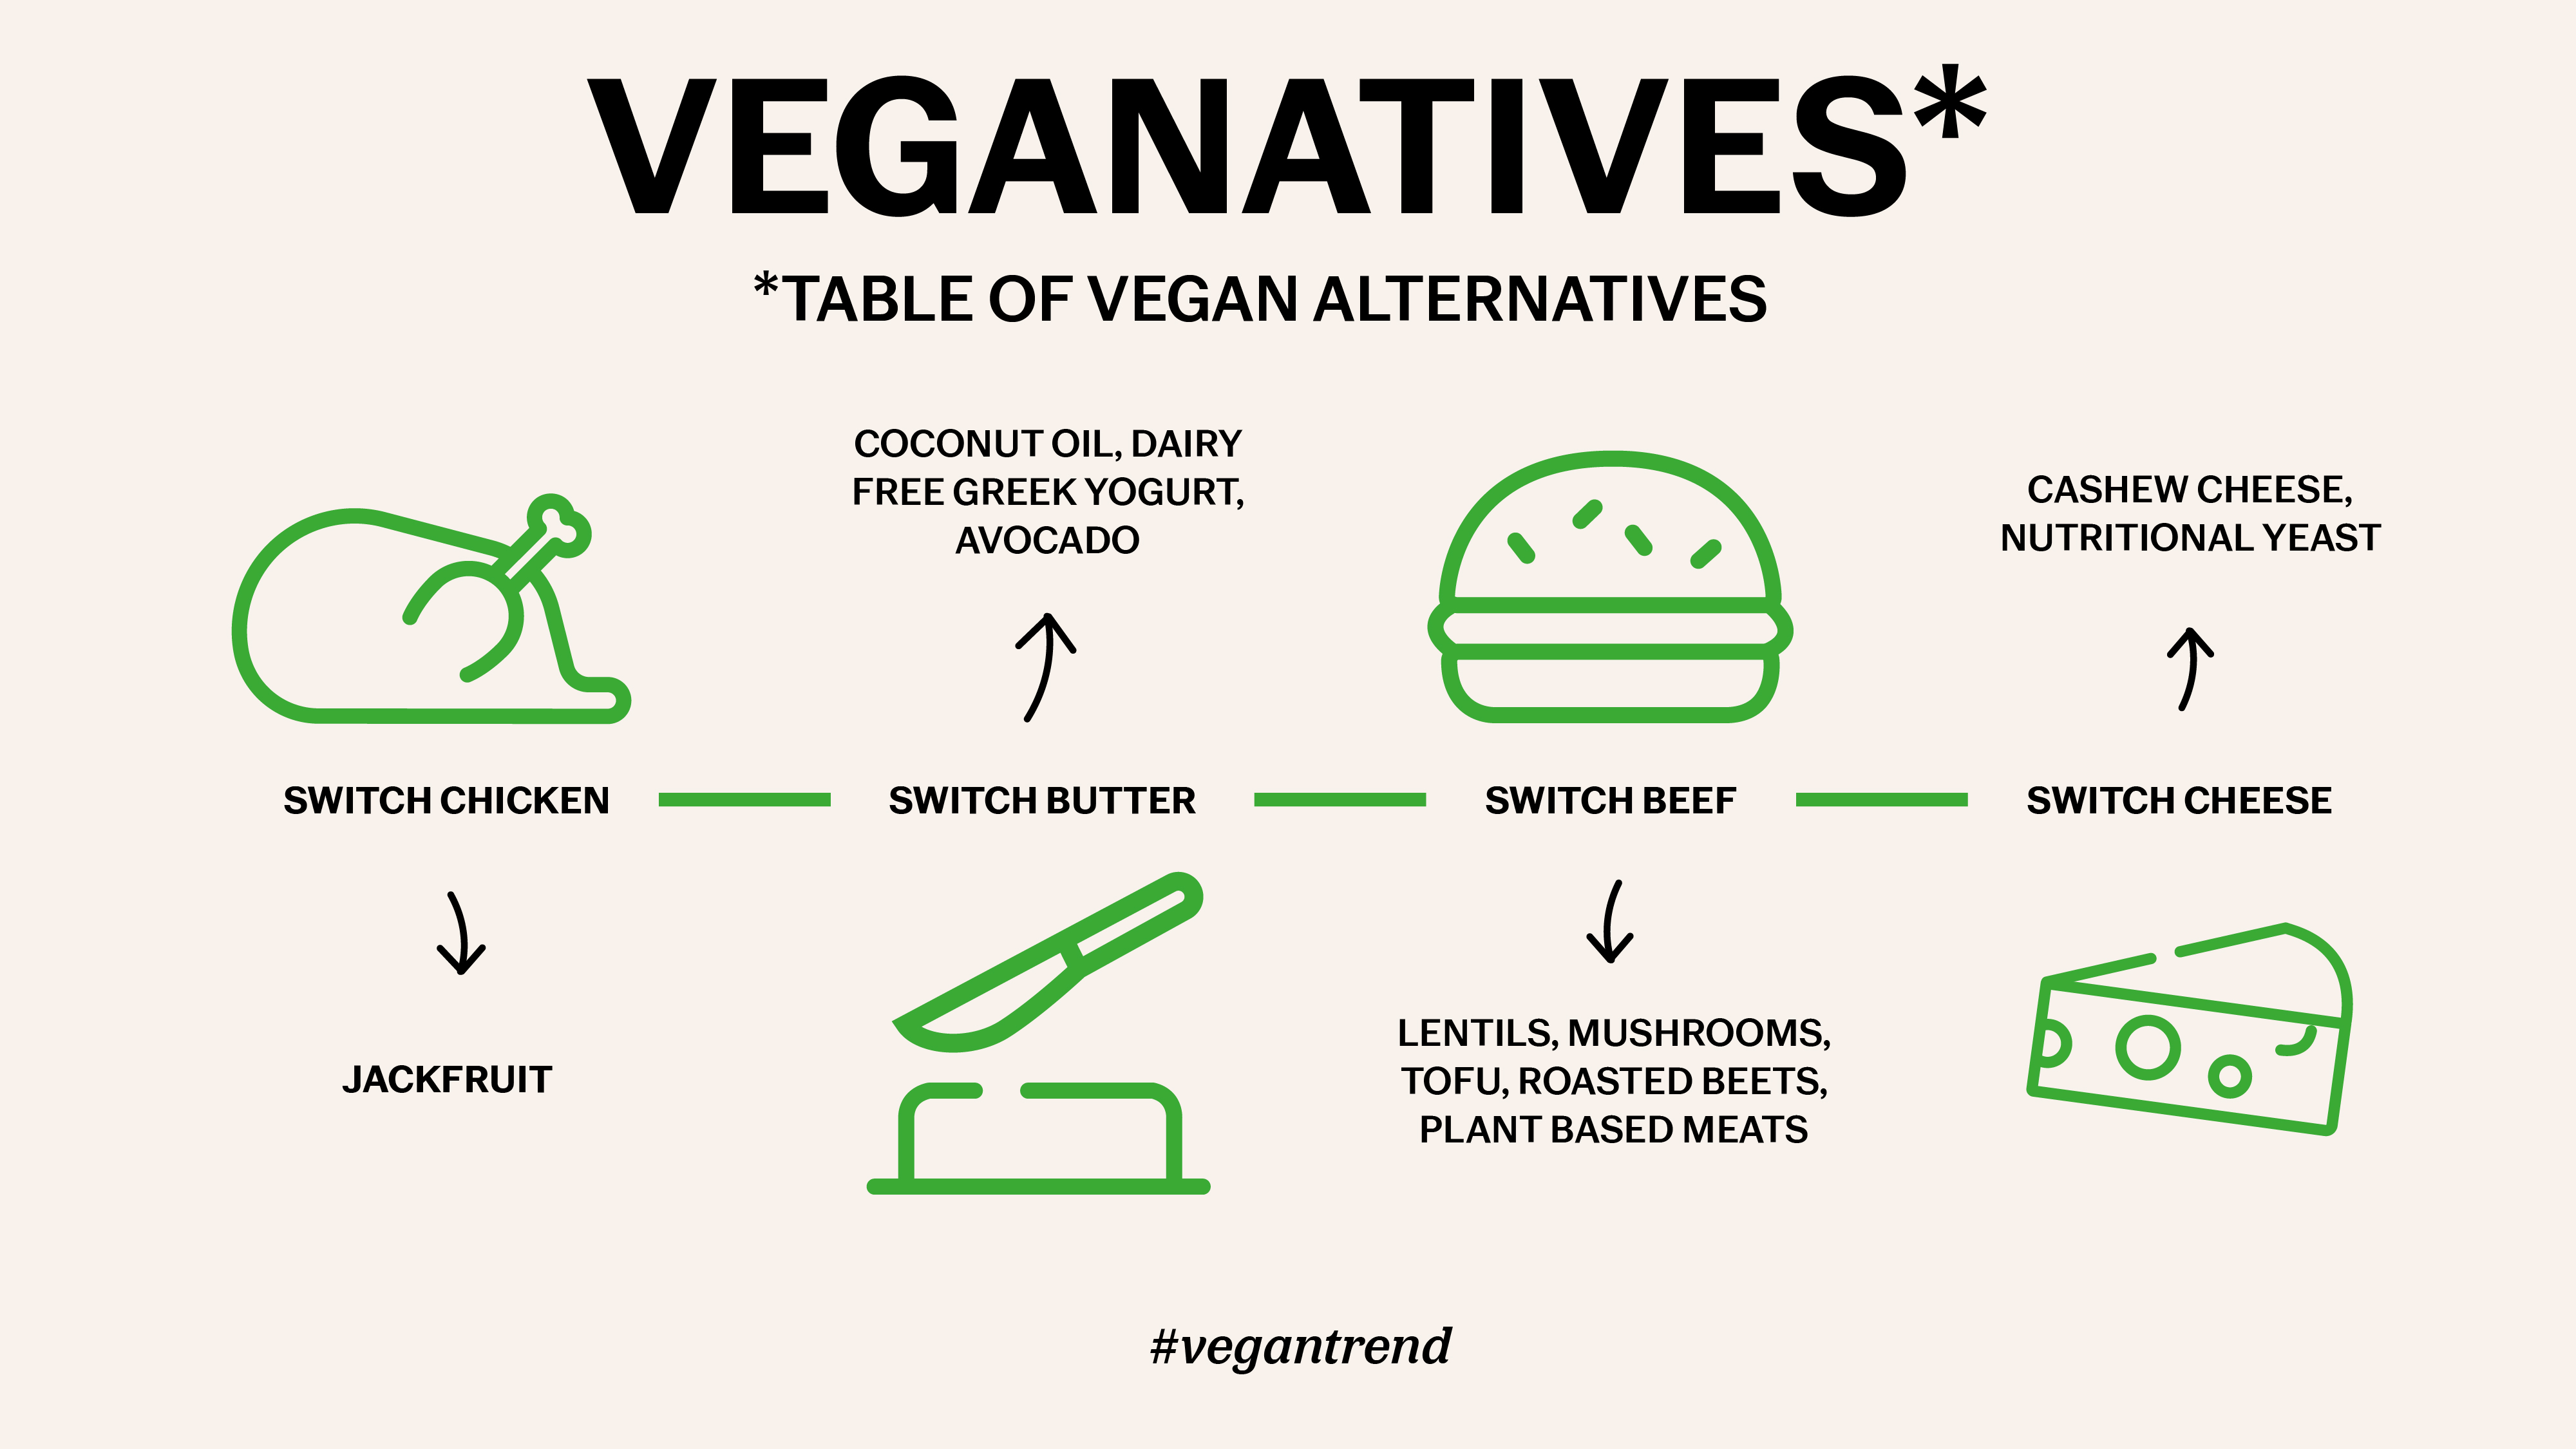 Table of vegan alternatives